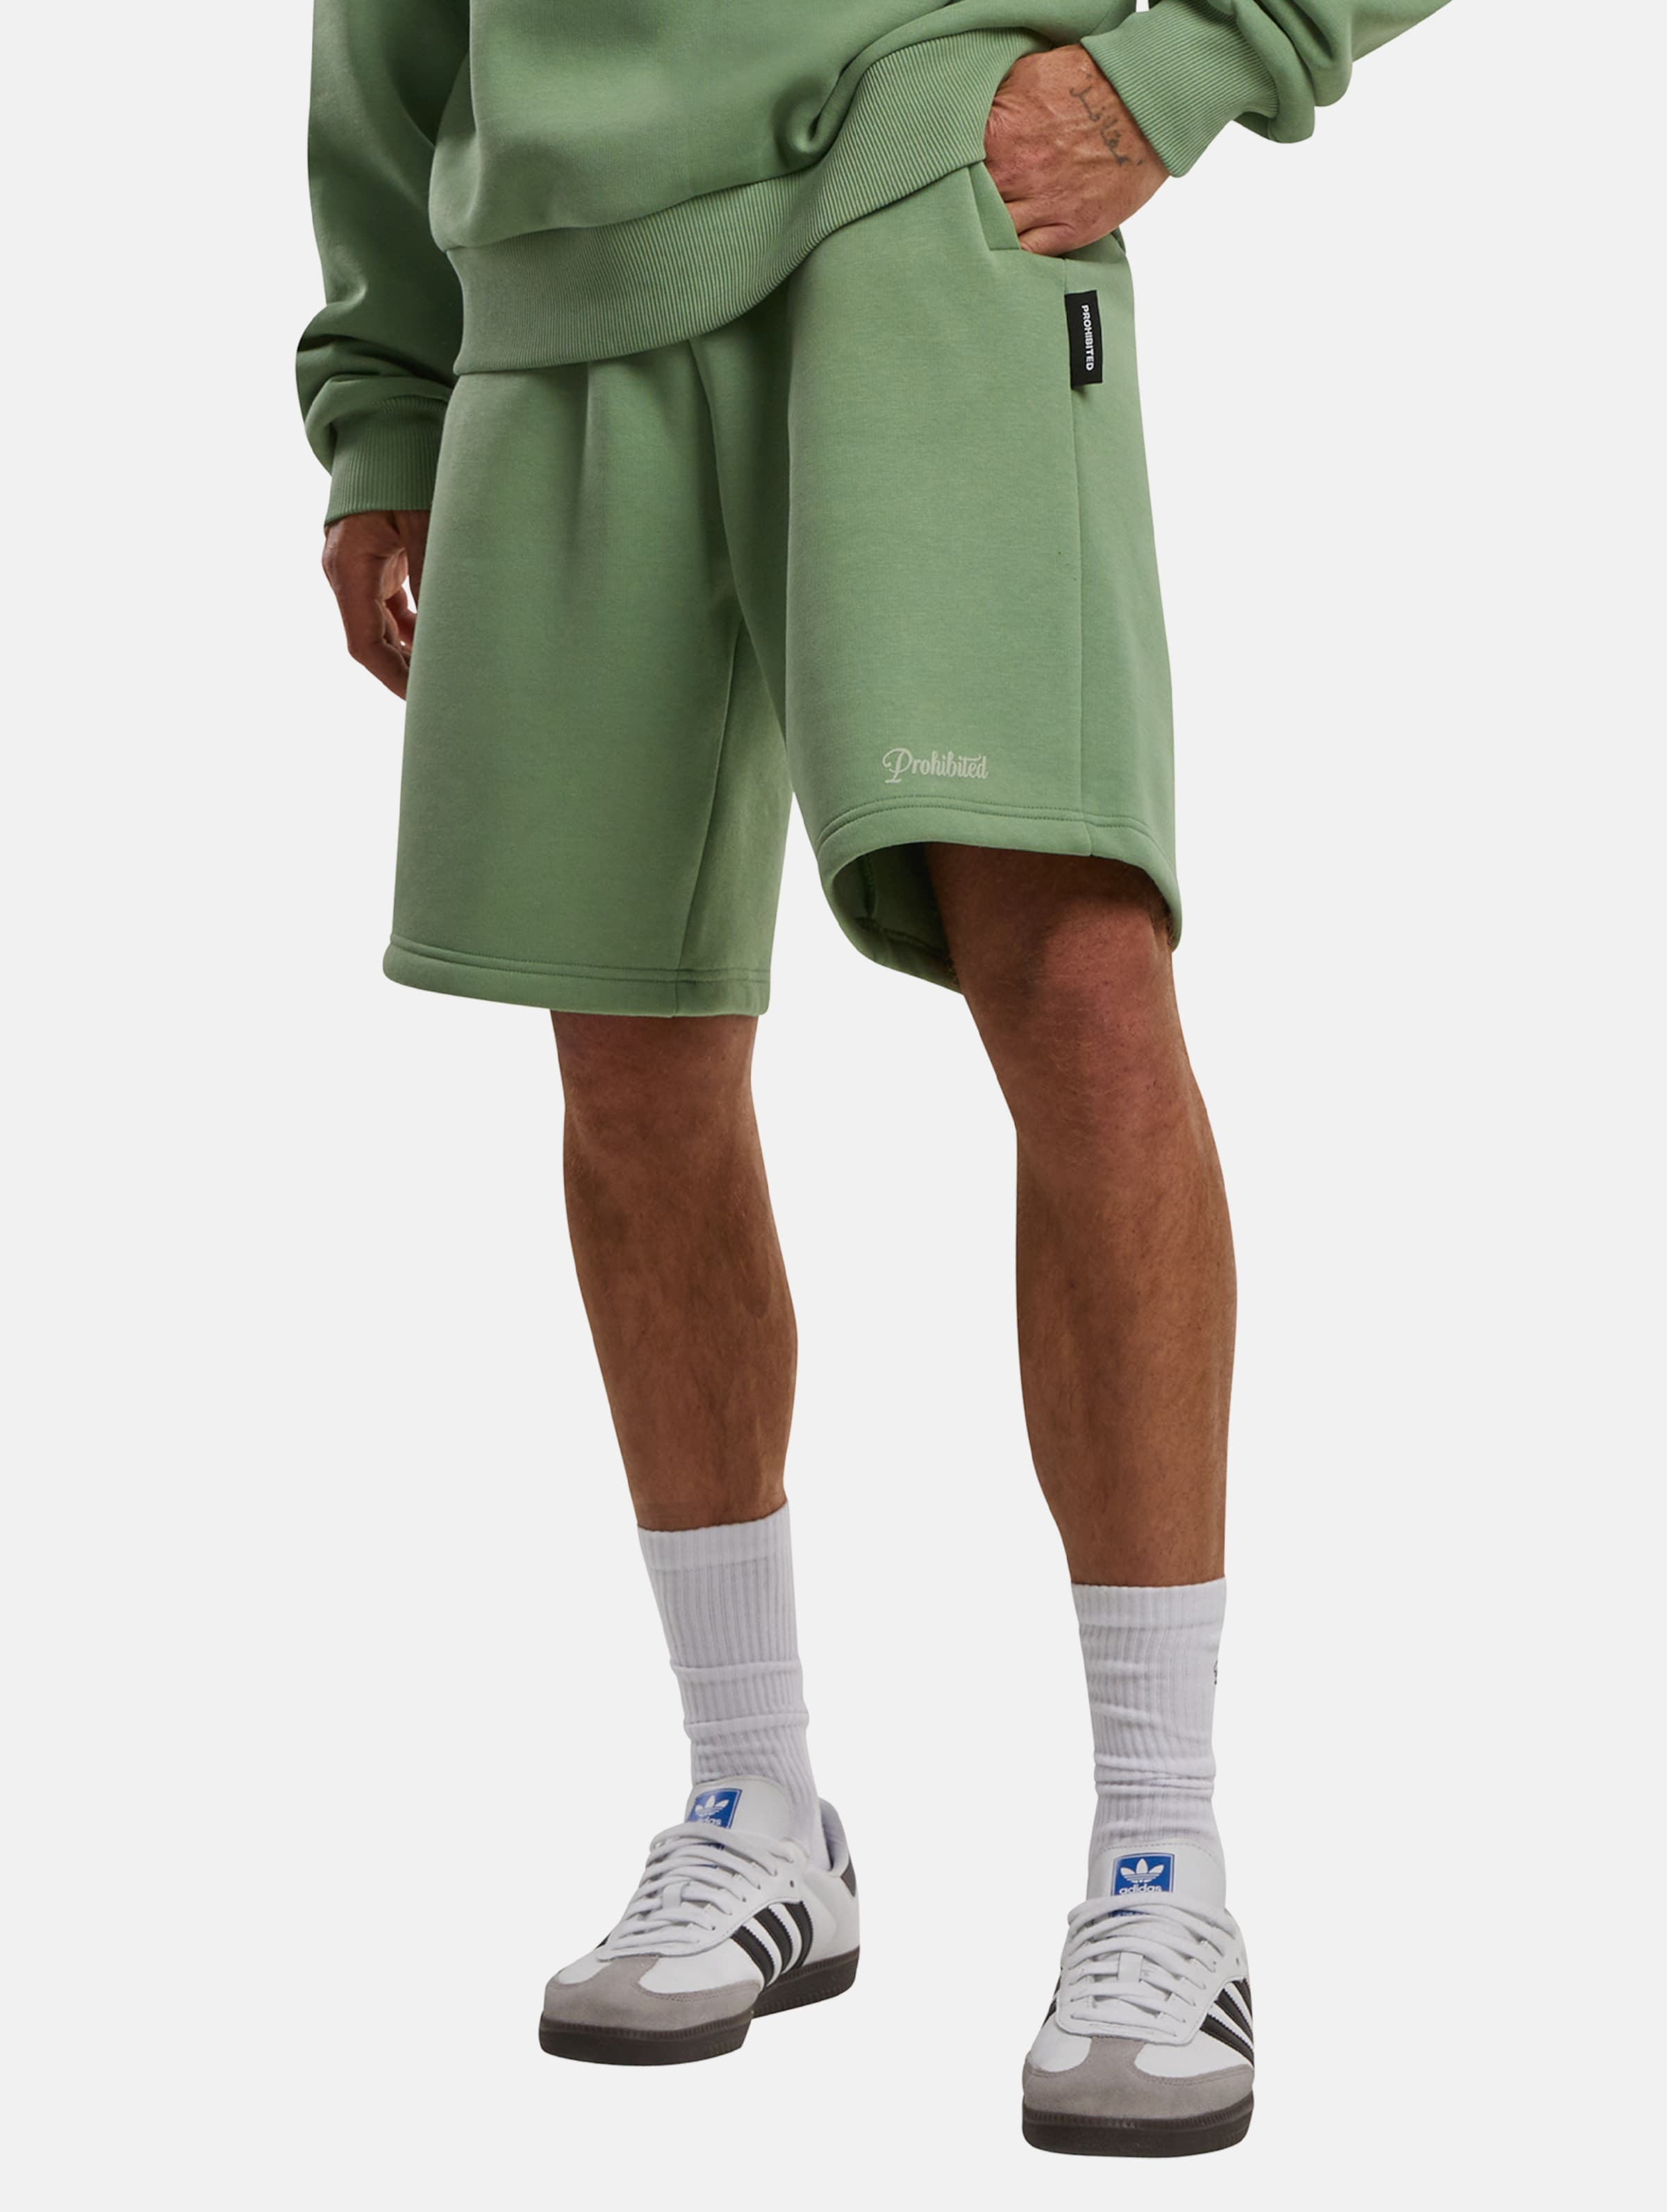 Prohibited 10119 V2 Shorts Männer,Unisex op kleur groen, Maat L